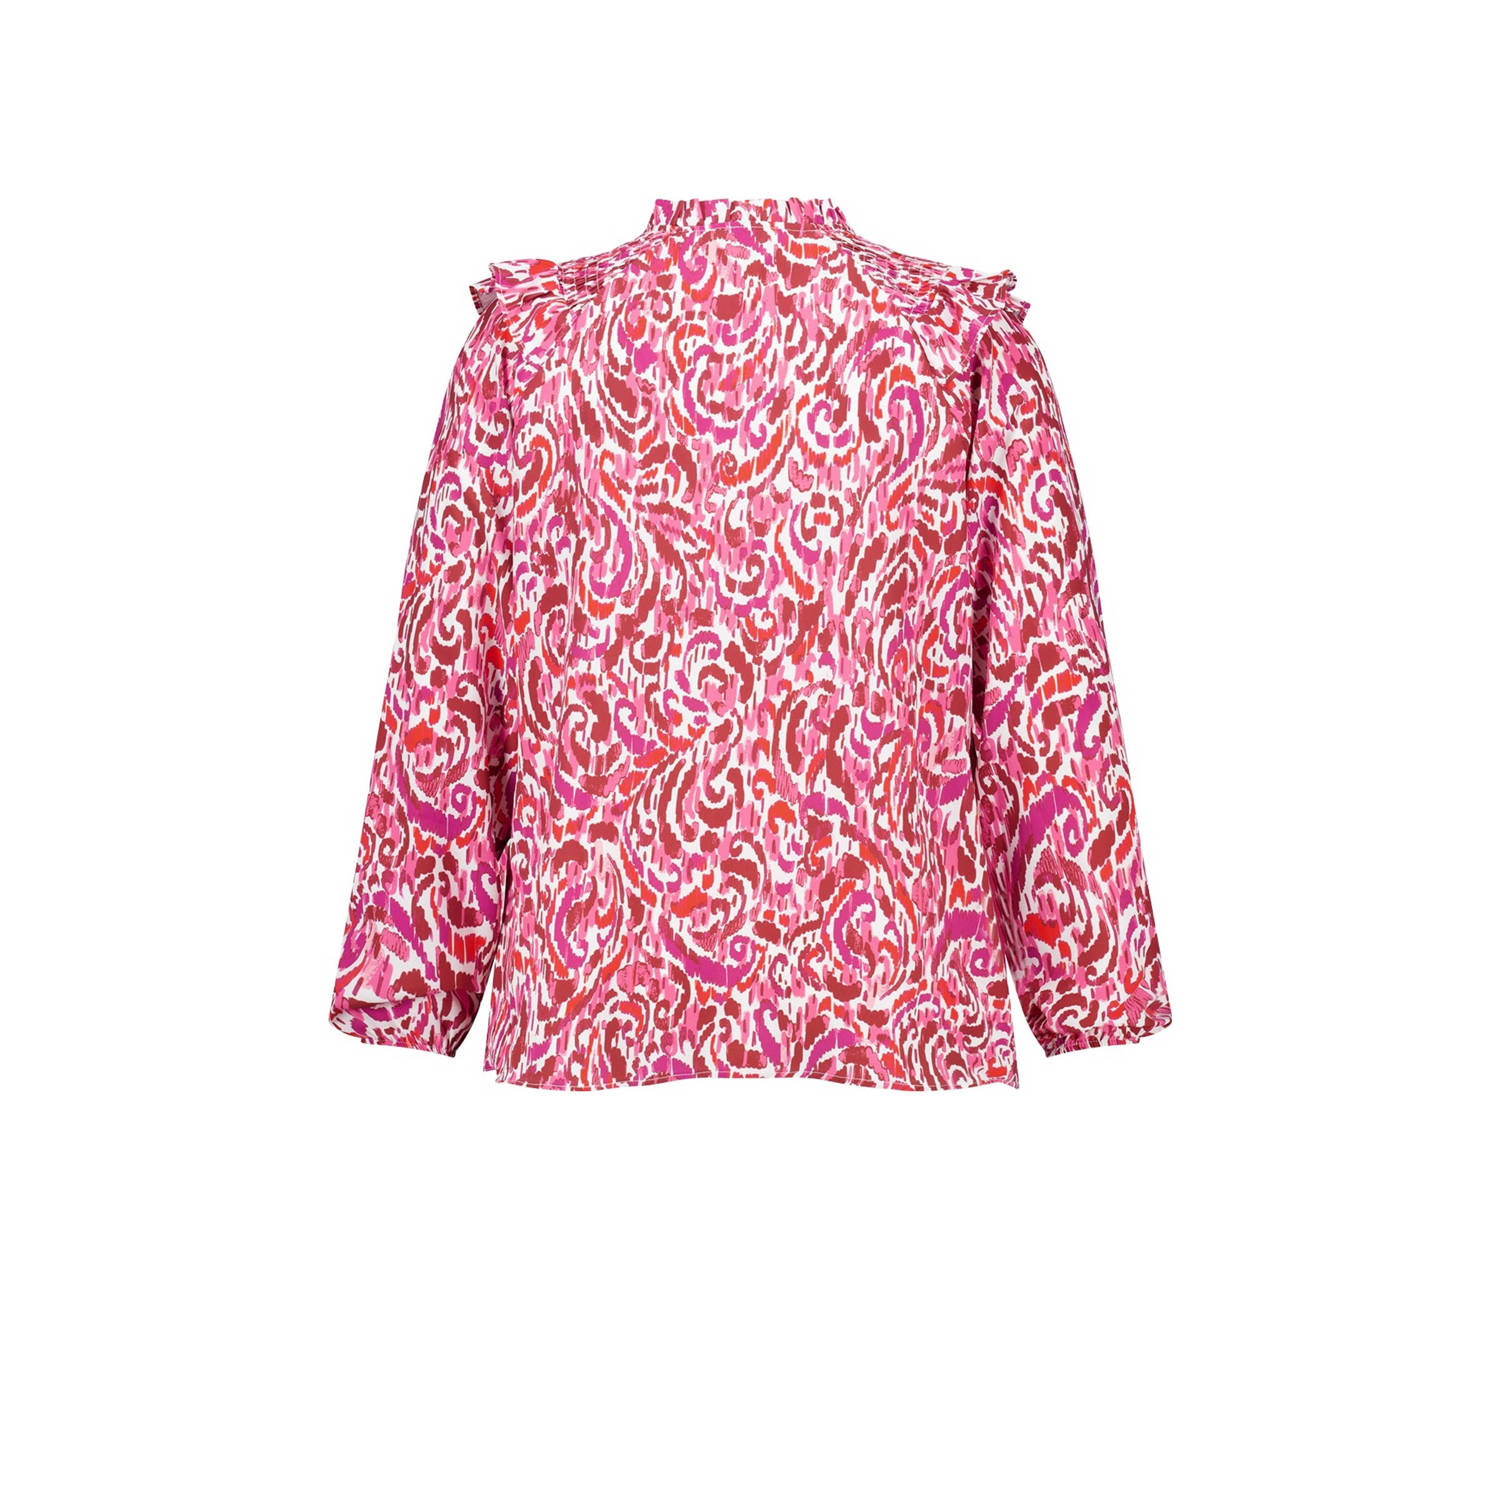 MS Mode blousetop met all over print en ruches roze rood ecru